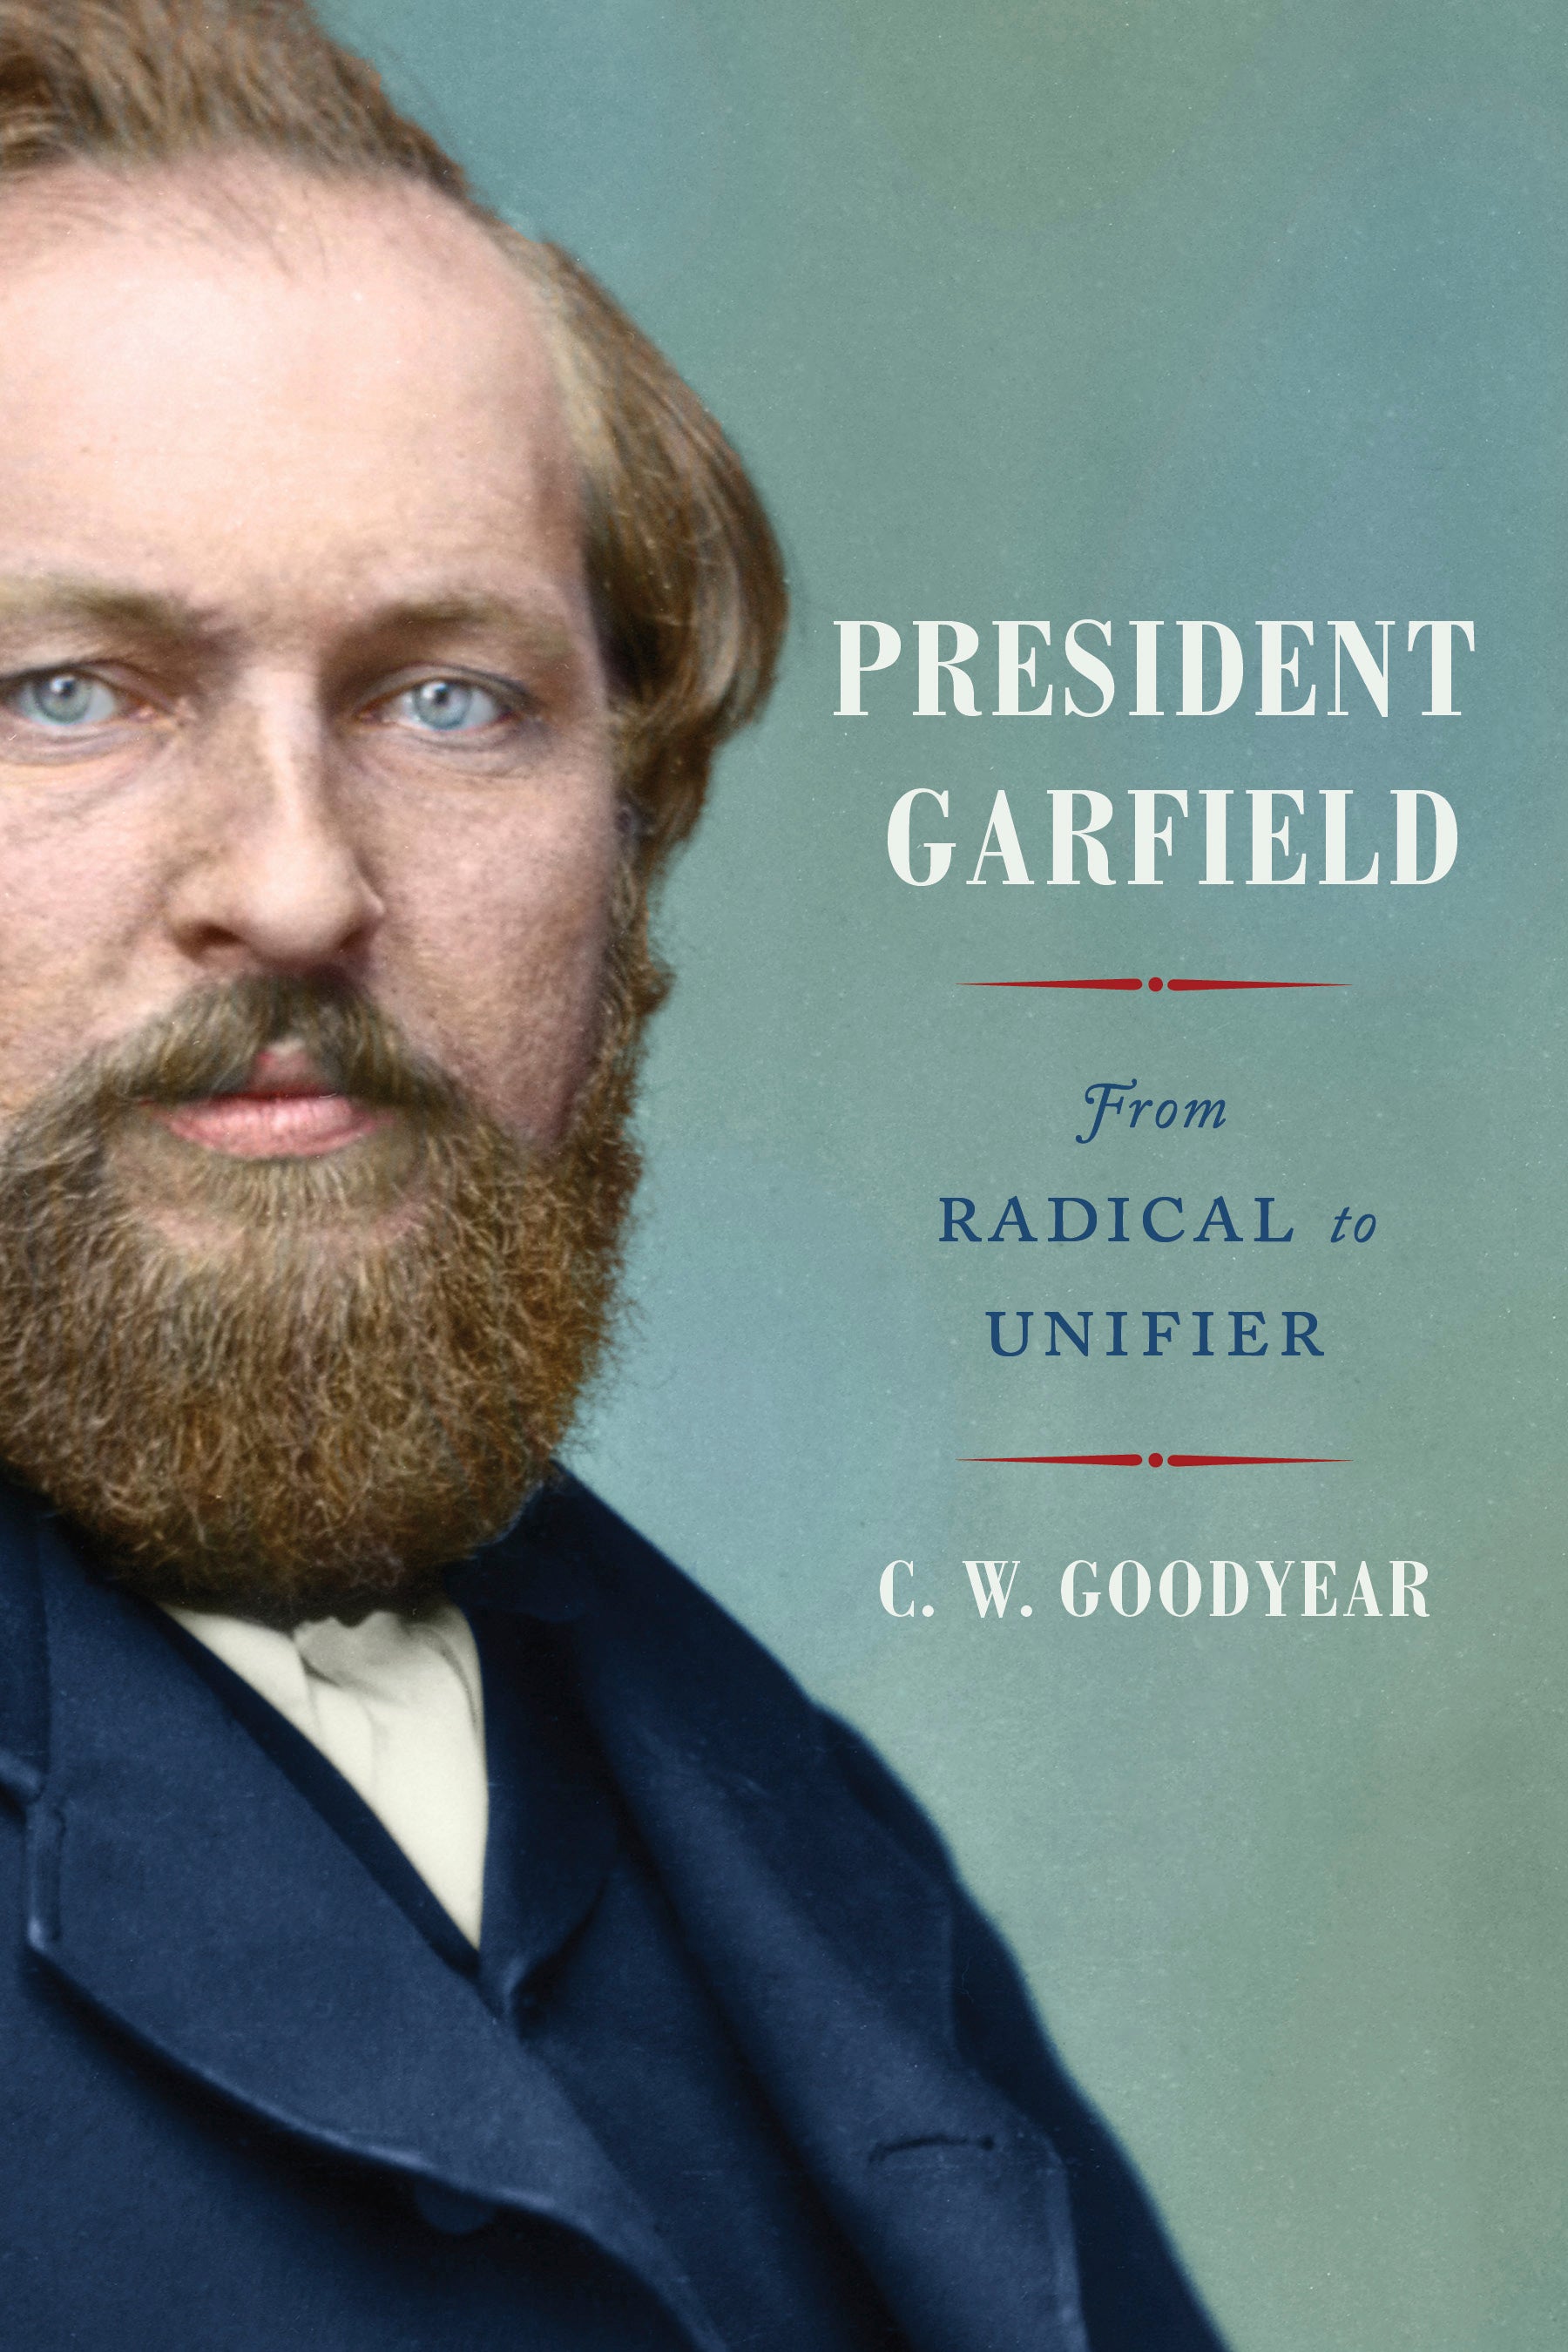 Book Review - President Garfield